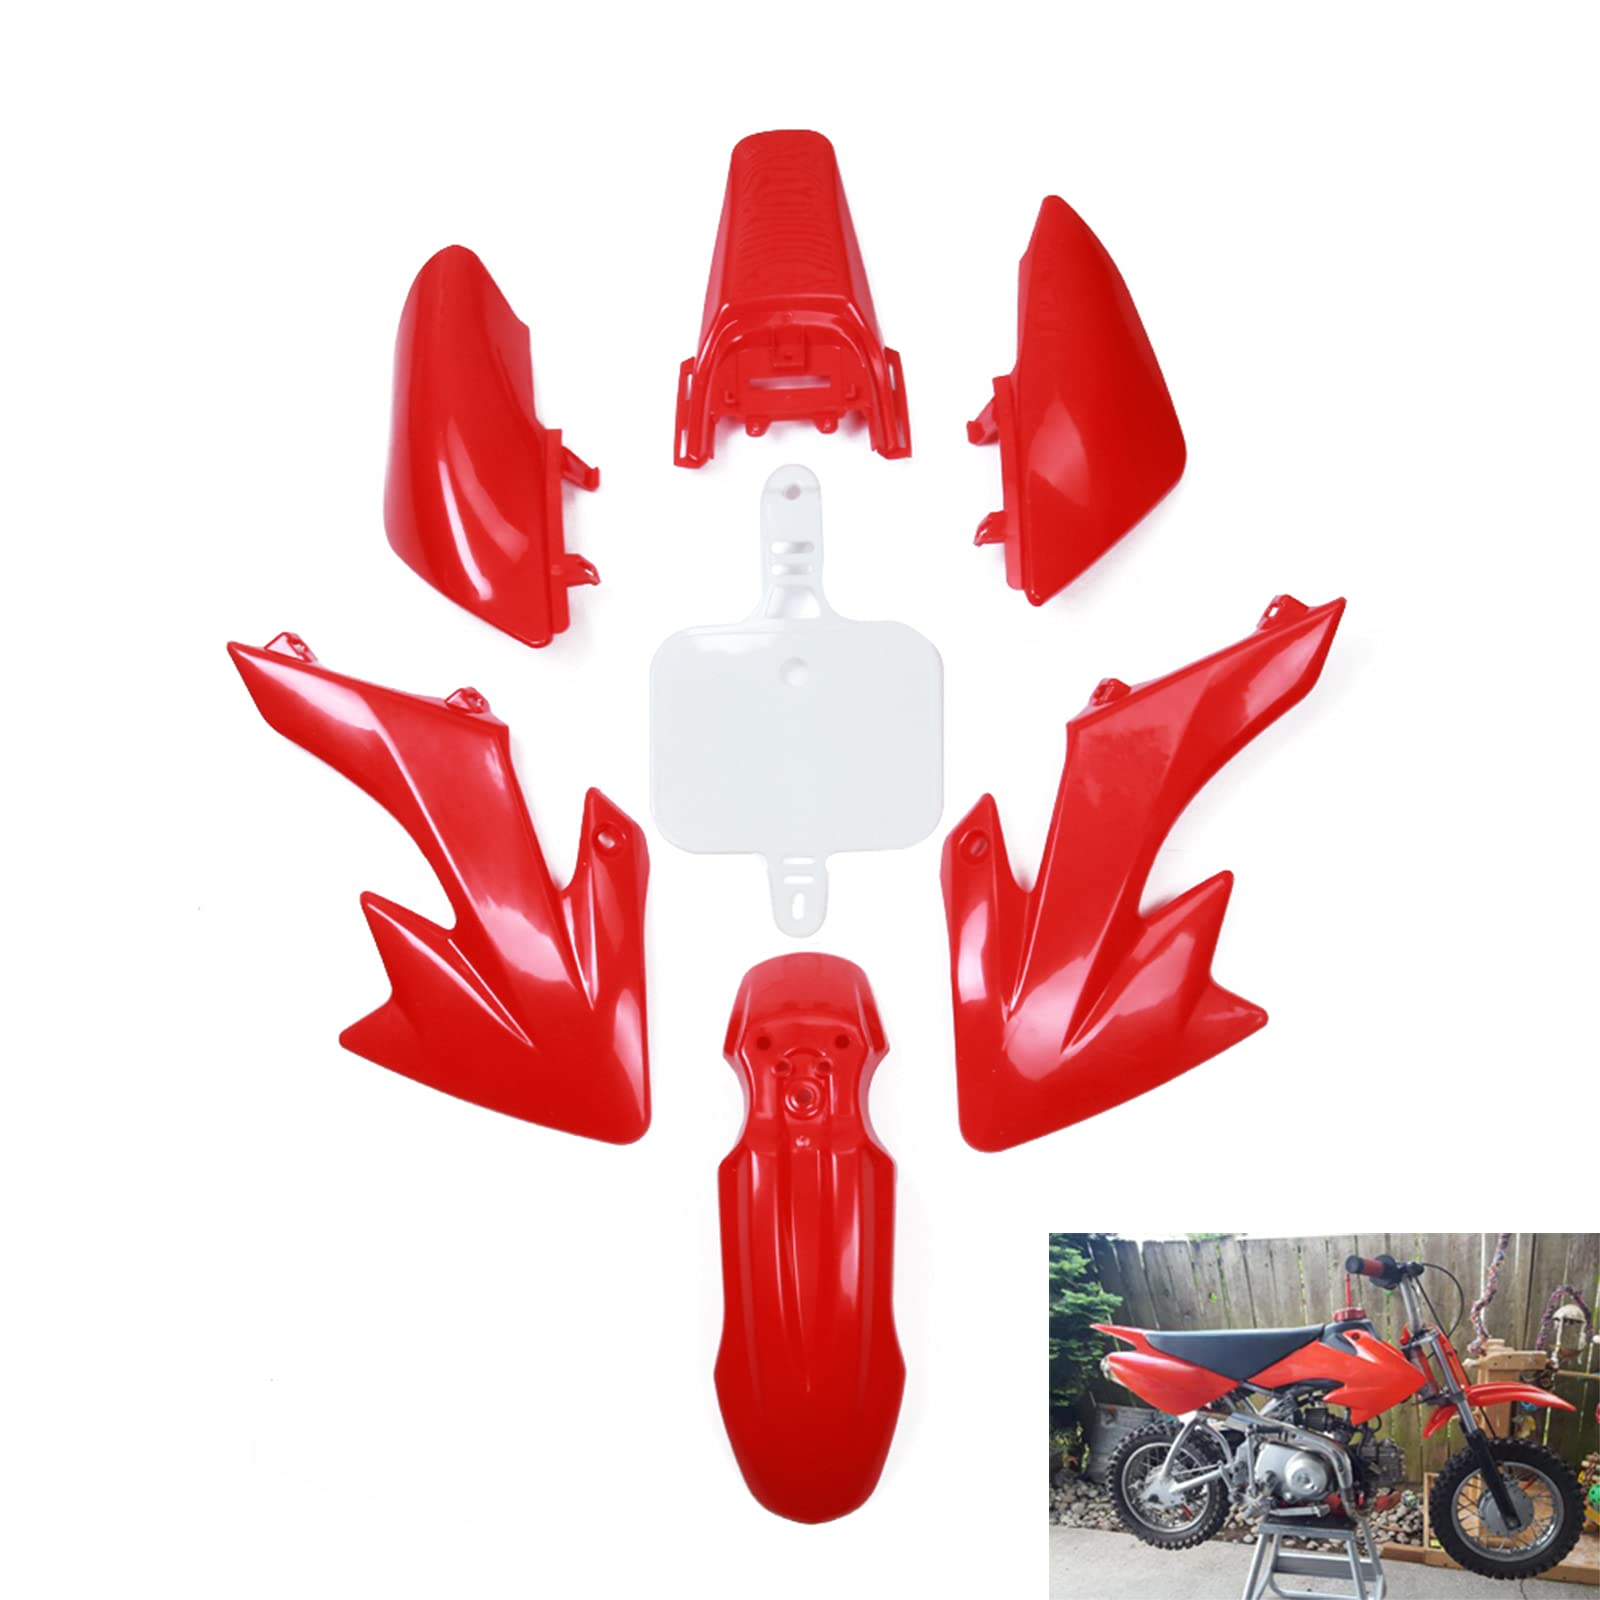 Motorrad ABS Kunststoff Kotflügel Kit Karosserie Arbeitsverkleidung Kit für XR50 CRF50 Chinesische 50cc 70cc 90cc 110cc 125cc 140cc 150cc 160cc Dirt Pit Bike (Rot und Weiß)